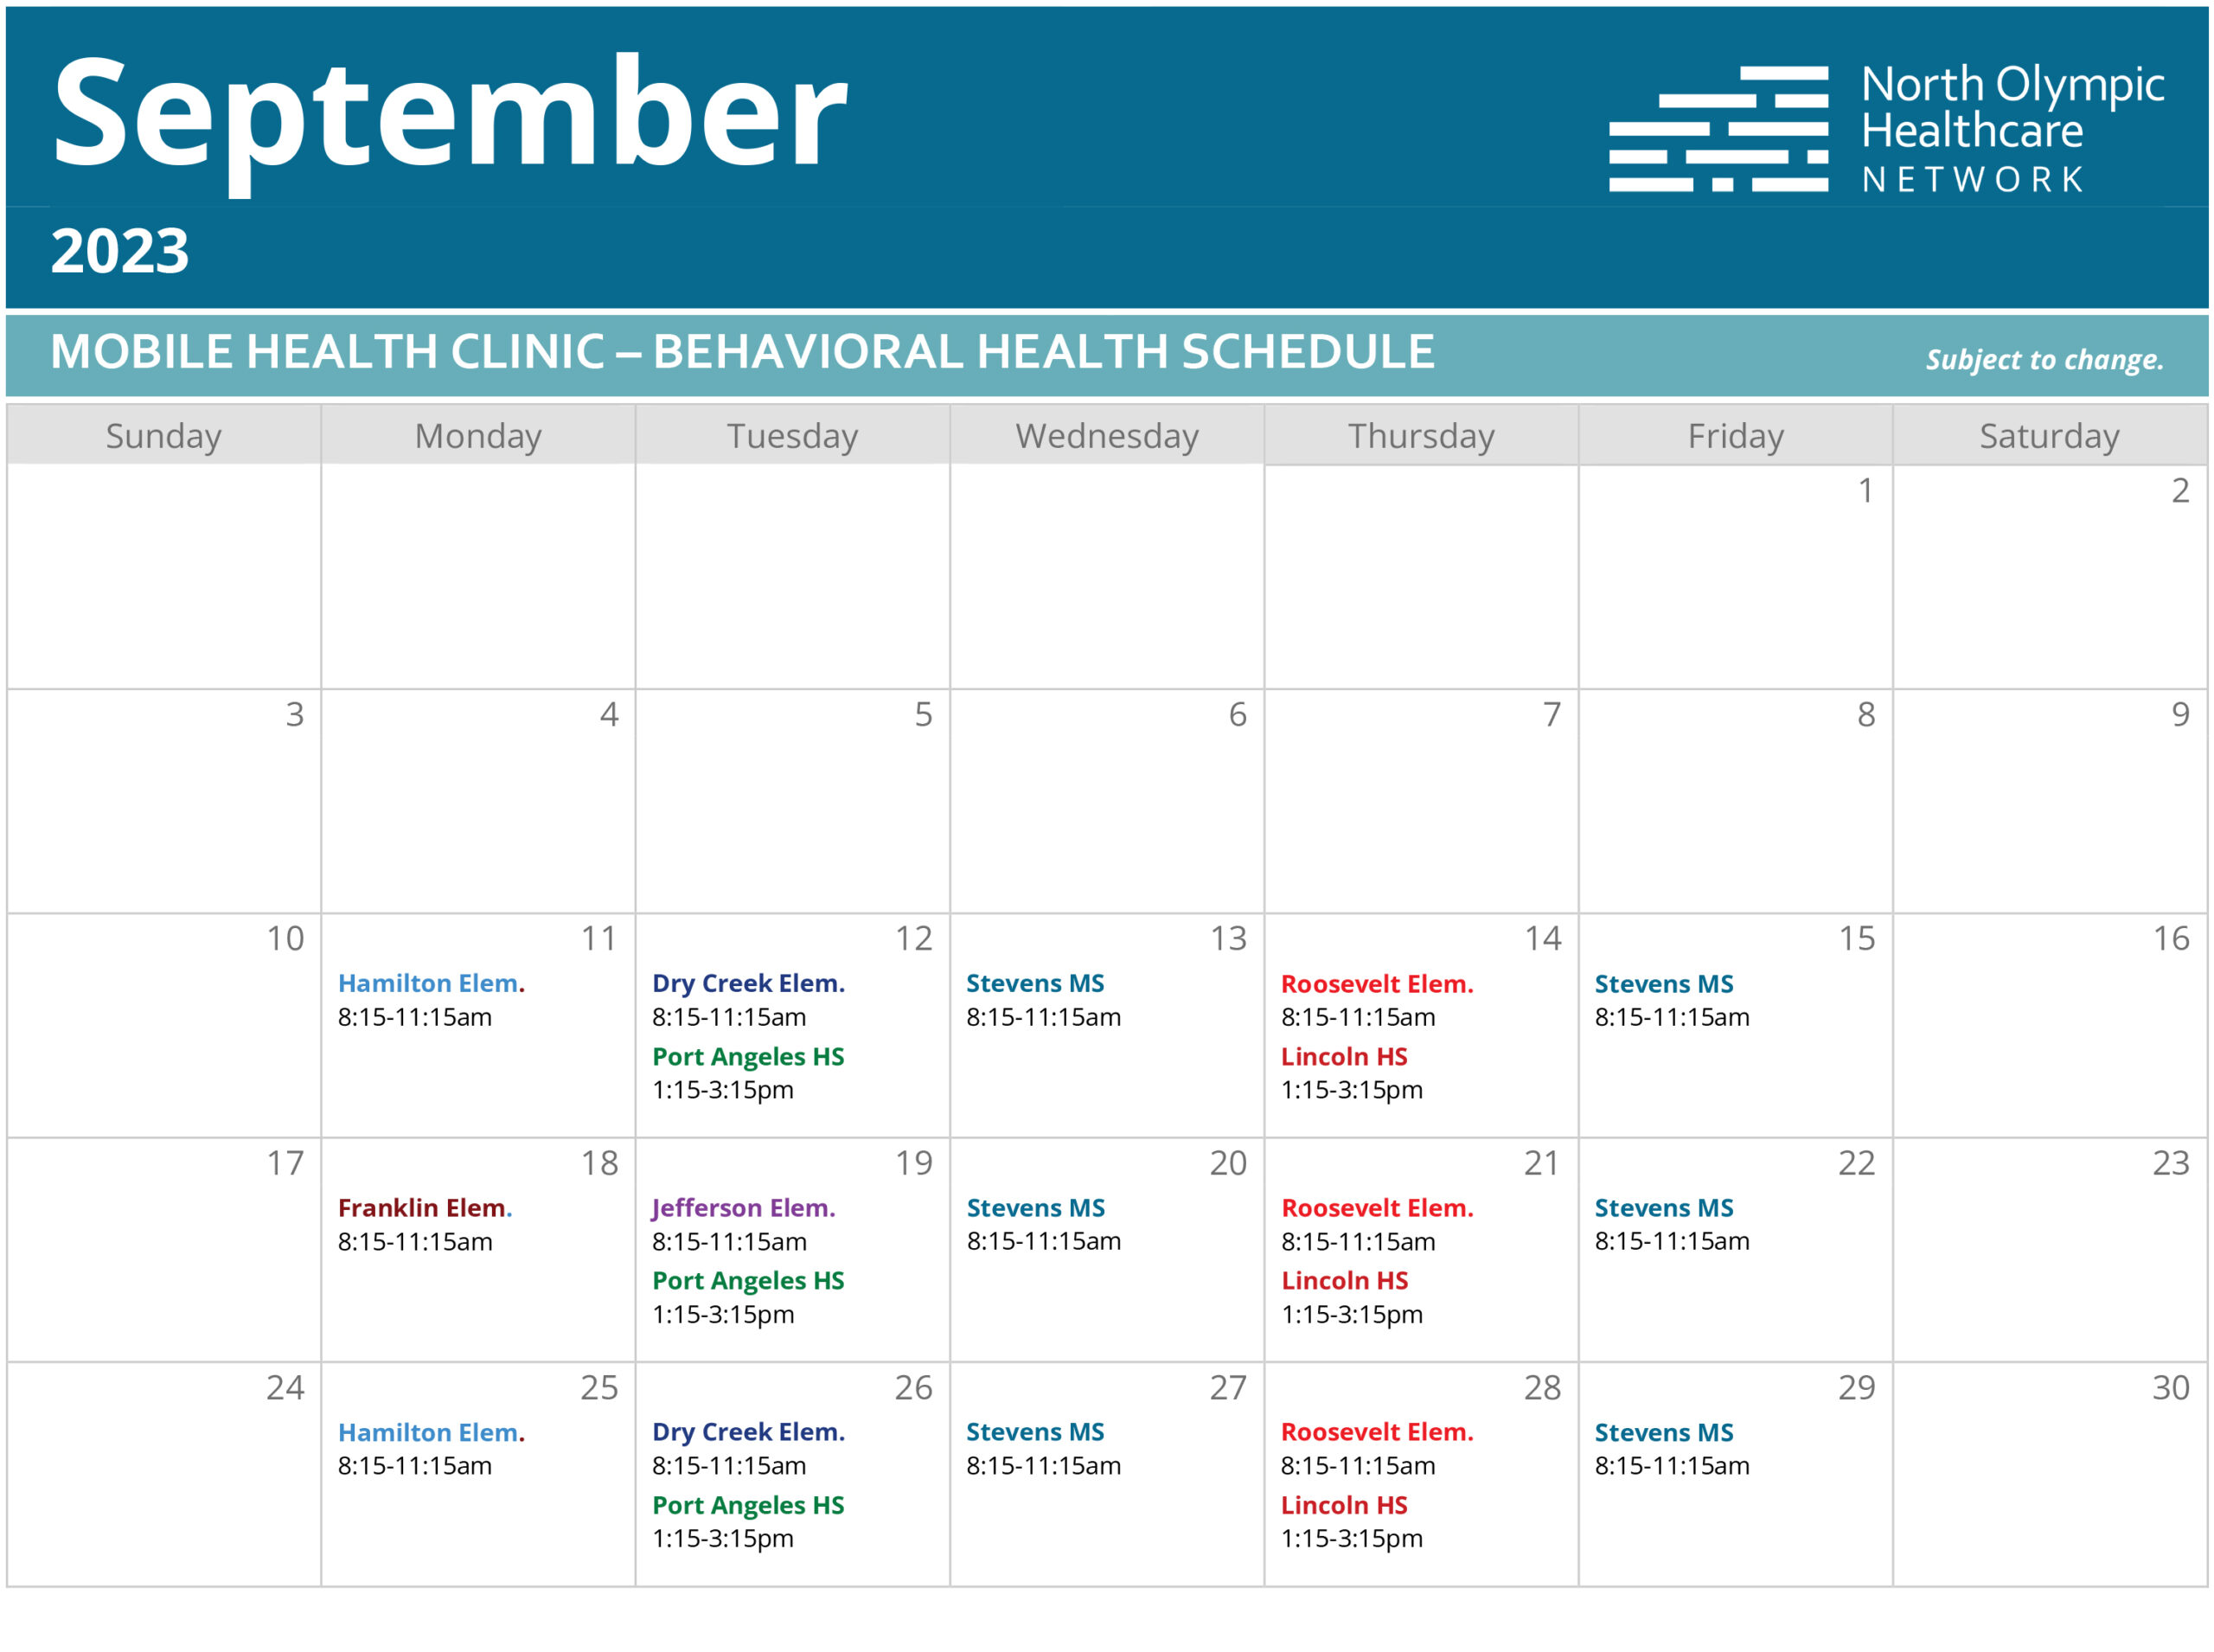 Calendar of Mobile Health Clinic visits in September 2023.